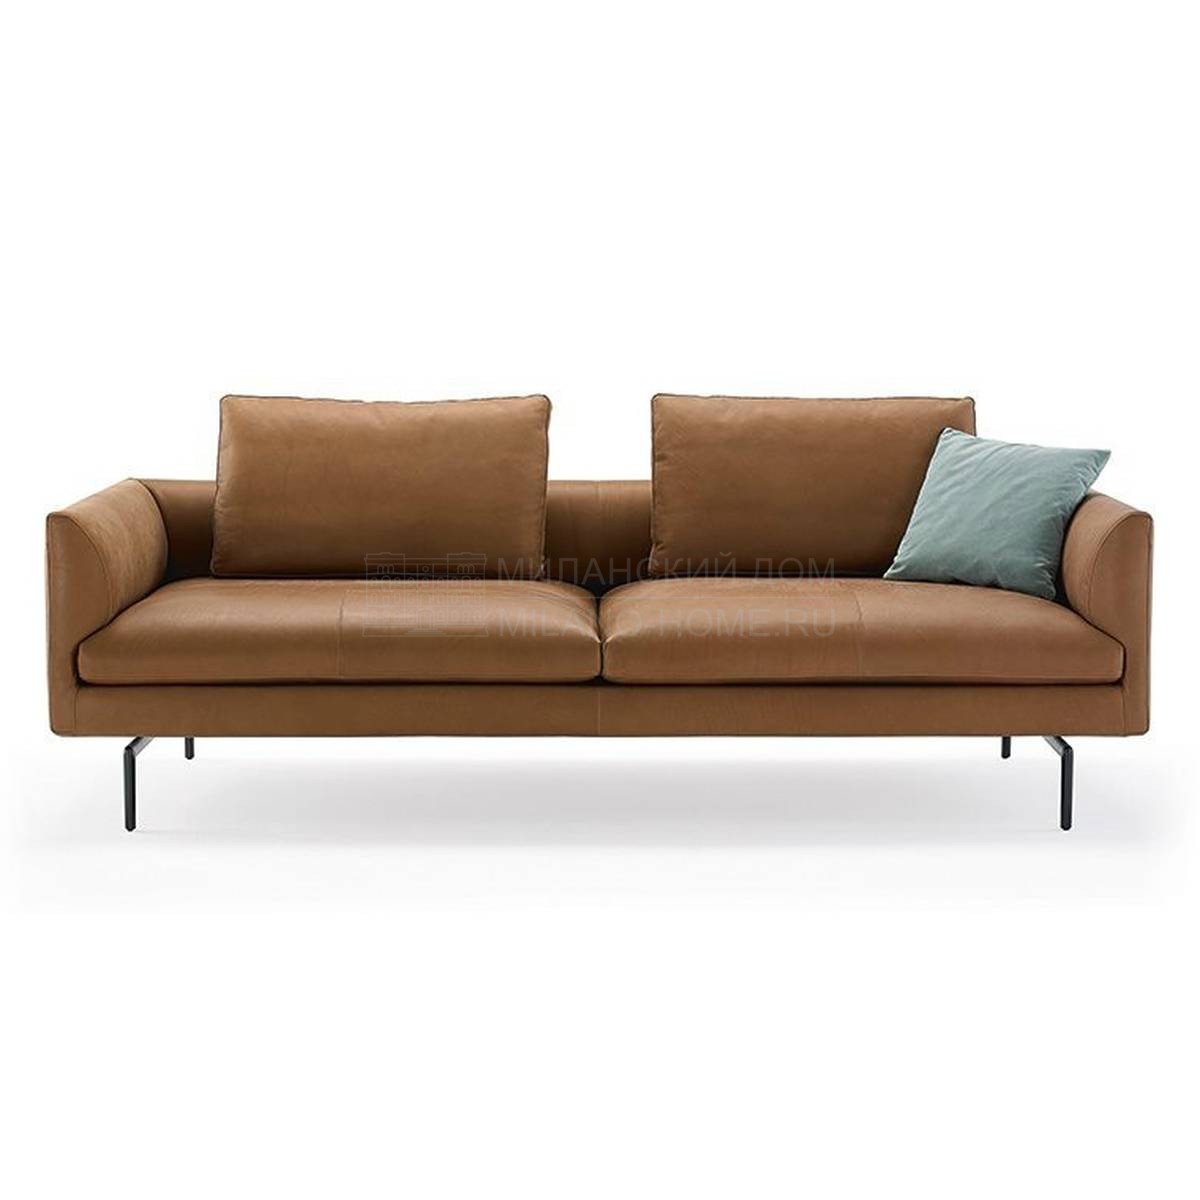 Прямой диван Flamingo sofa leather из Италии фабрики ZANOTTA